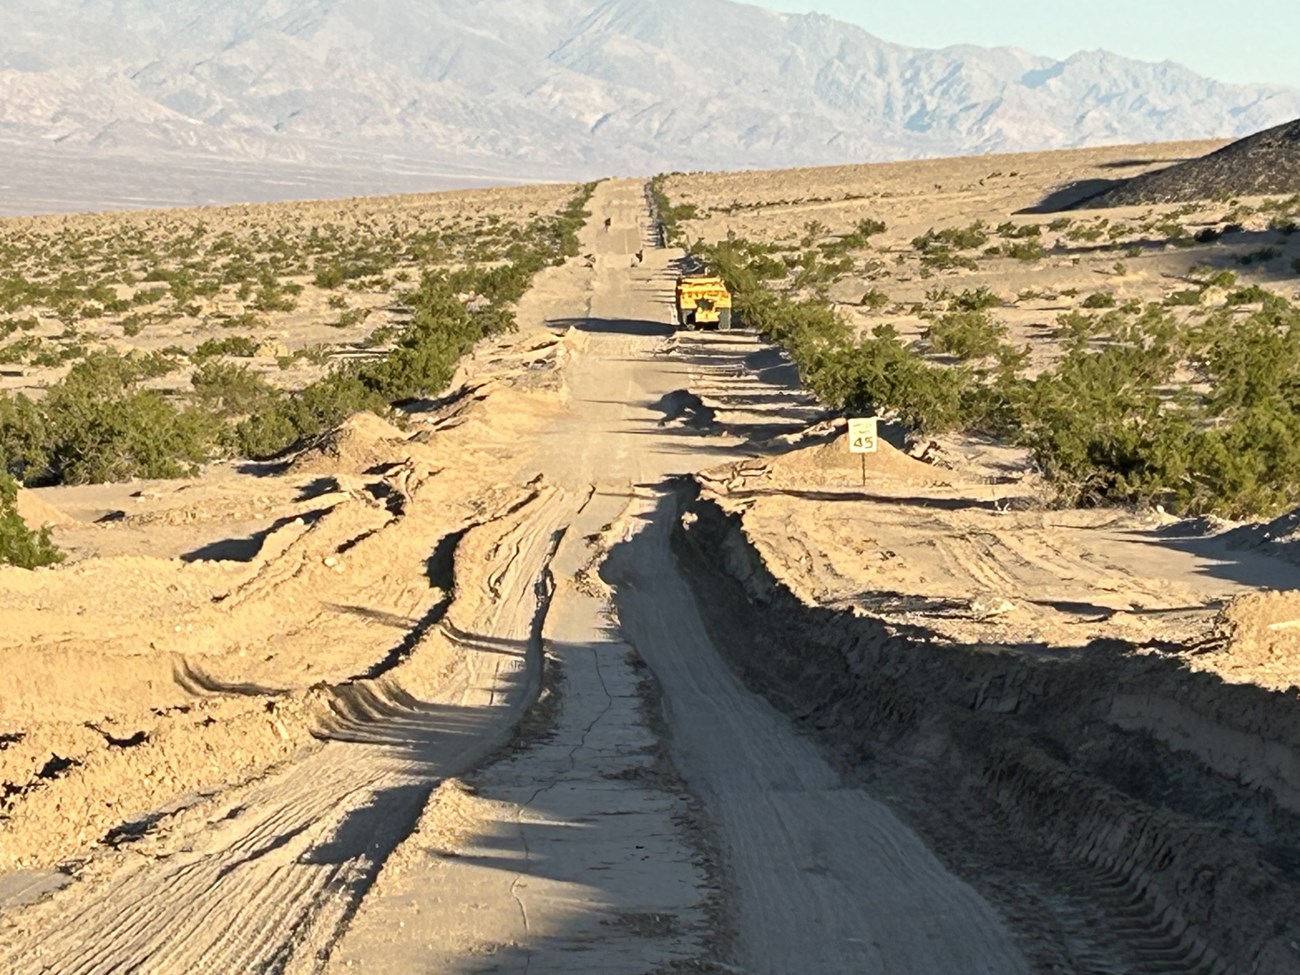 One lane plowed through brown dirt covering a desert road.